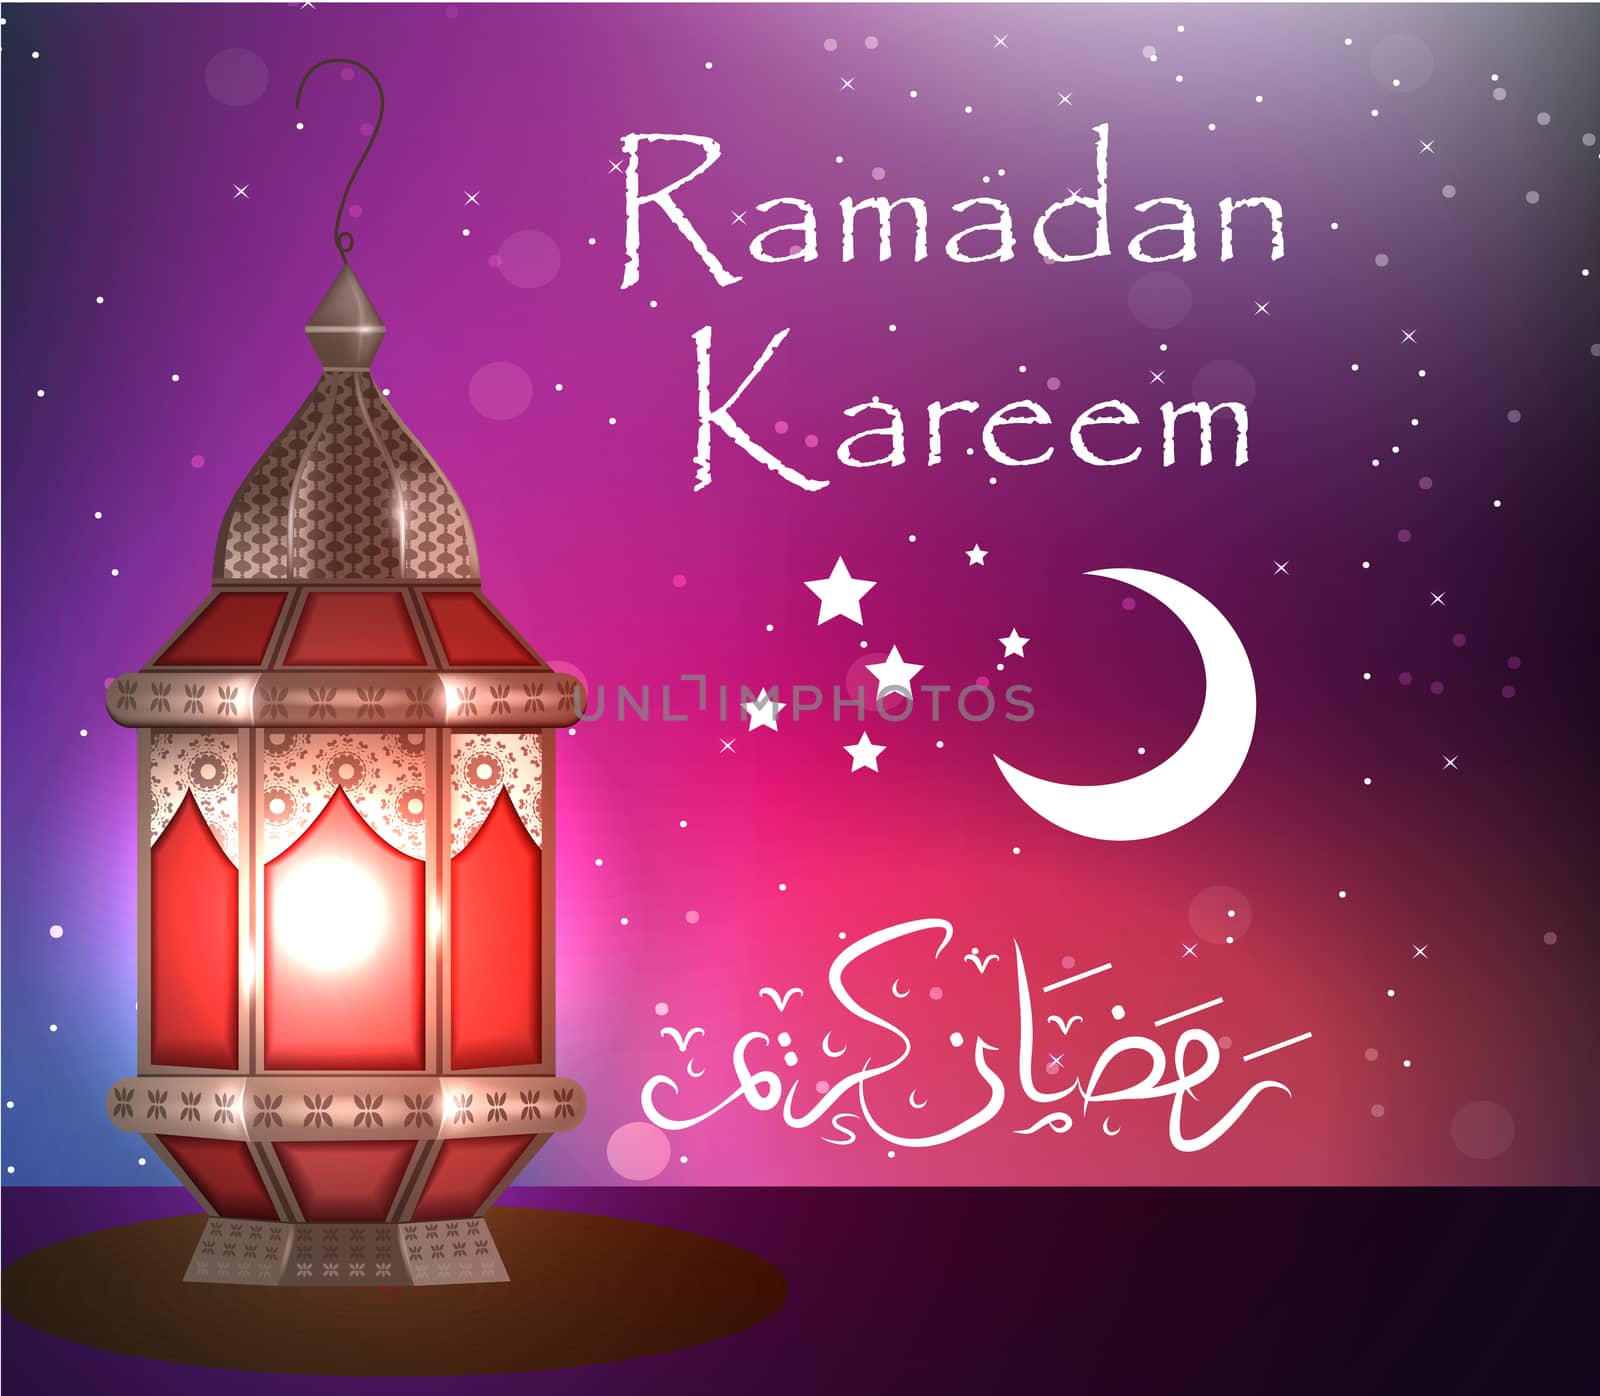 Ramadan Kareem greeting card with lanterns, template for invitation, flyer. Muslim religious holiday. illustration